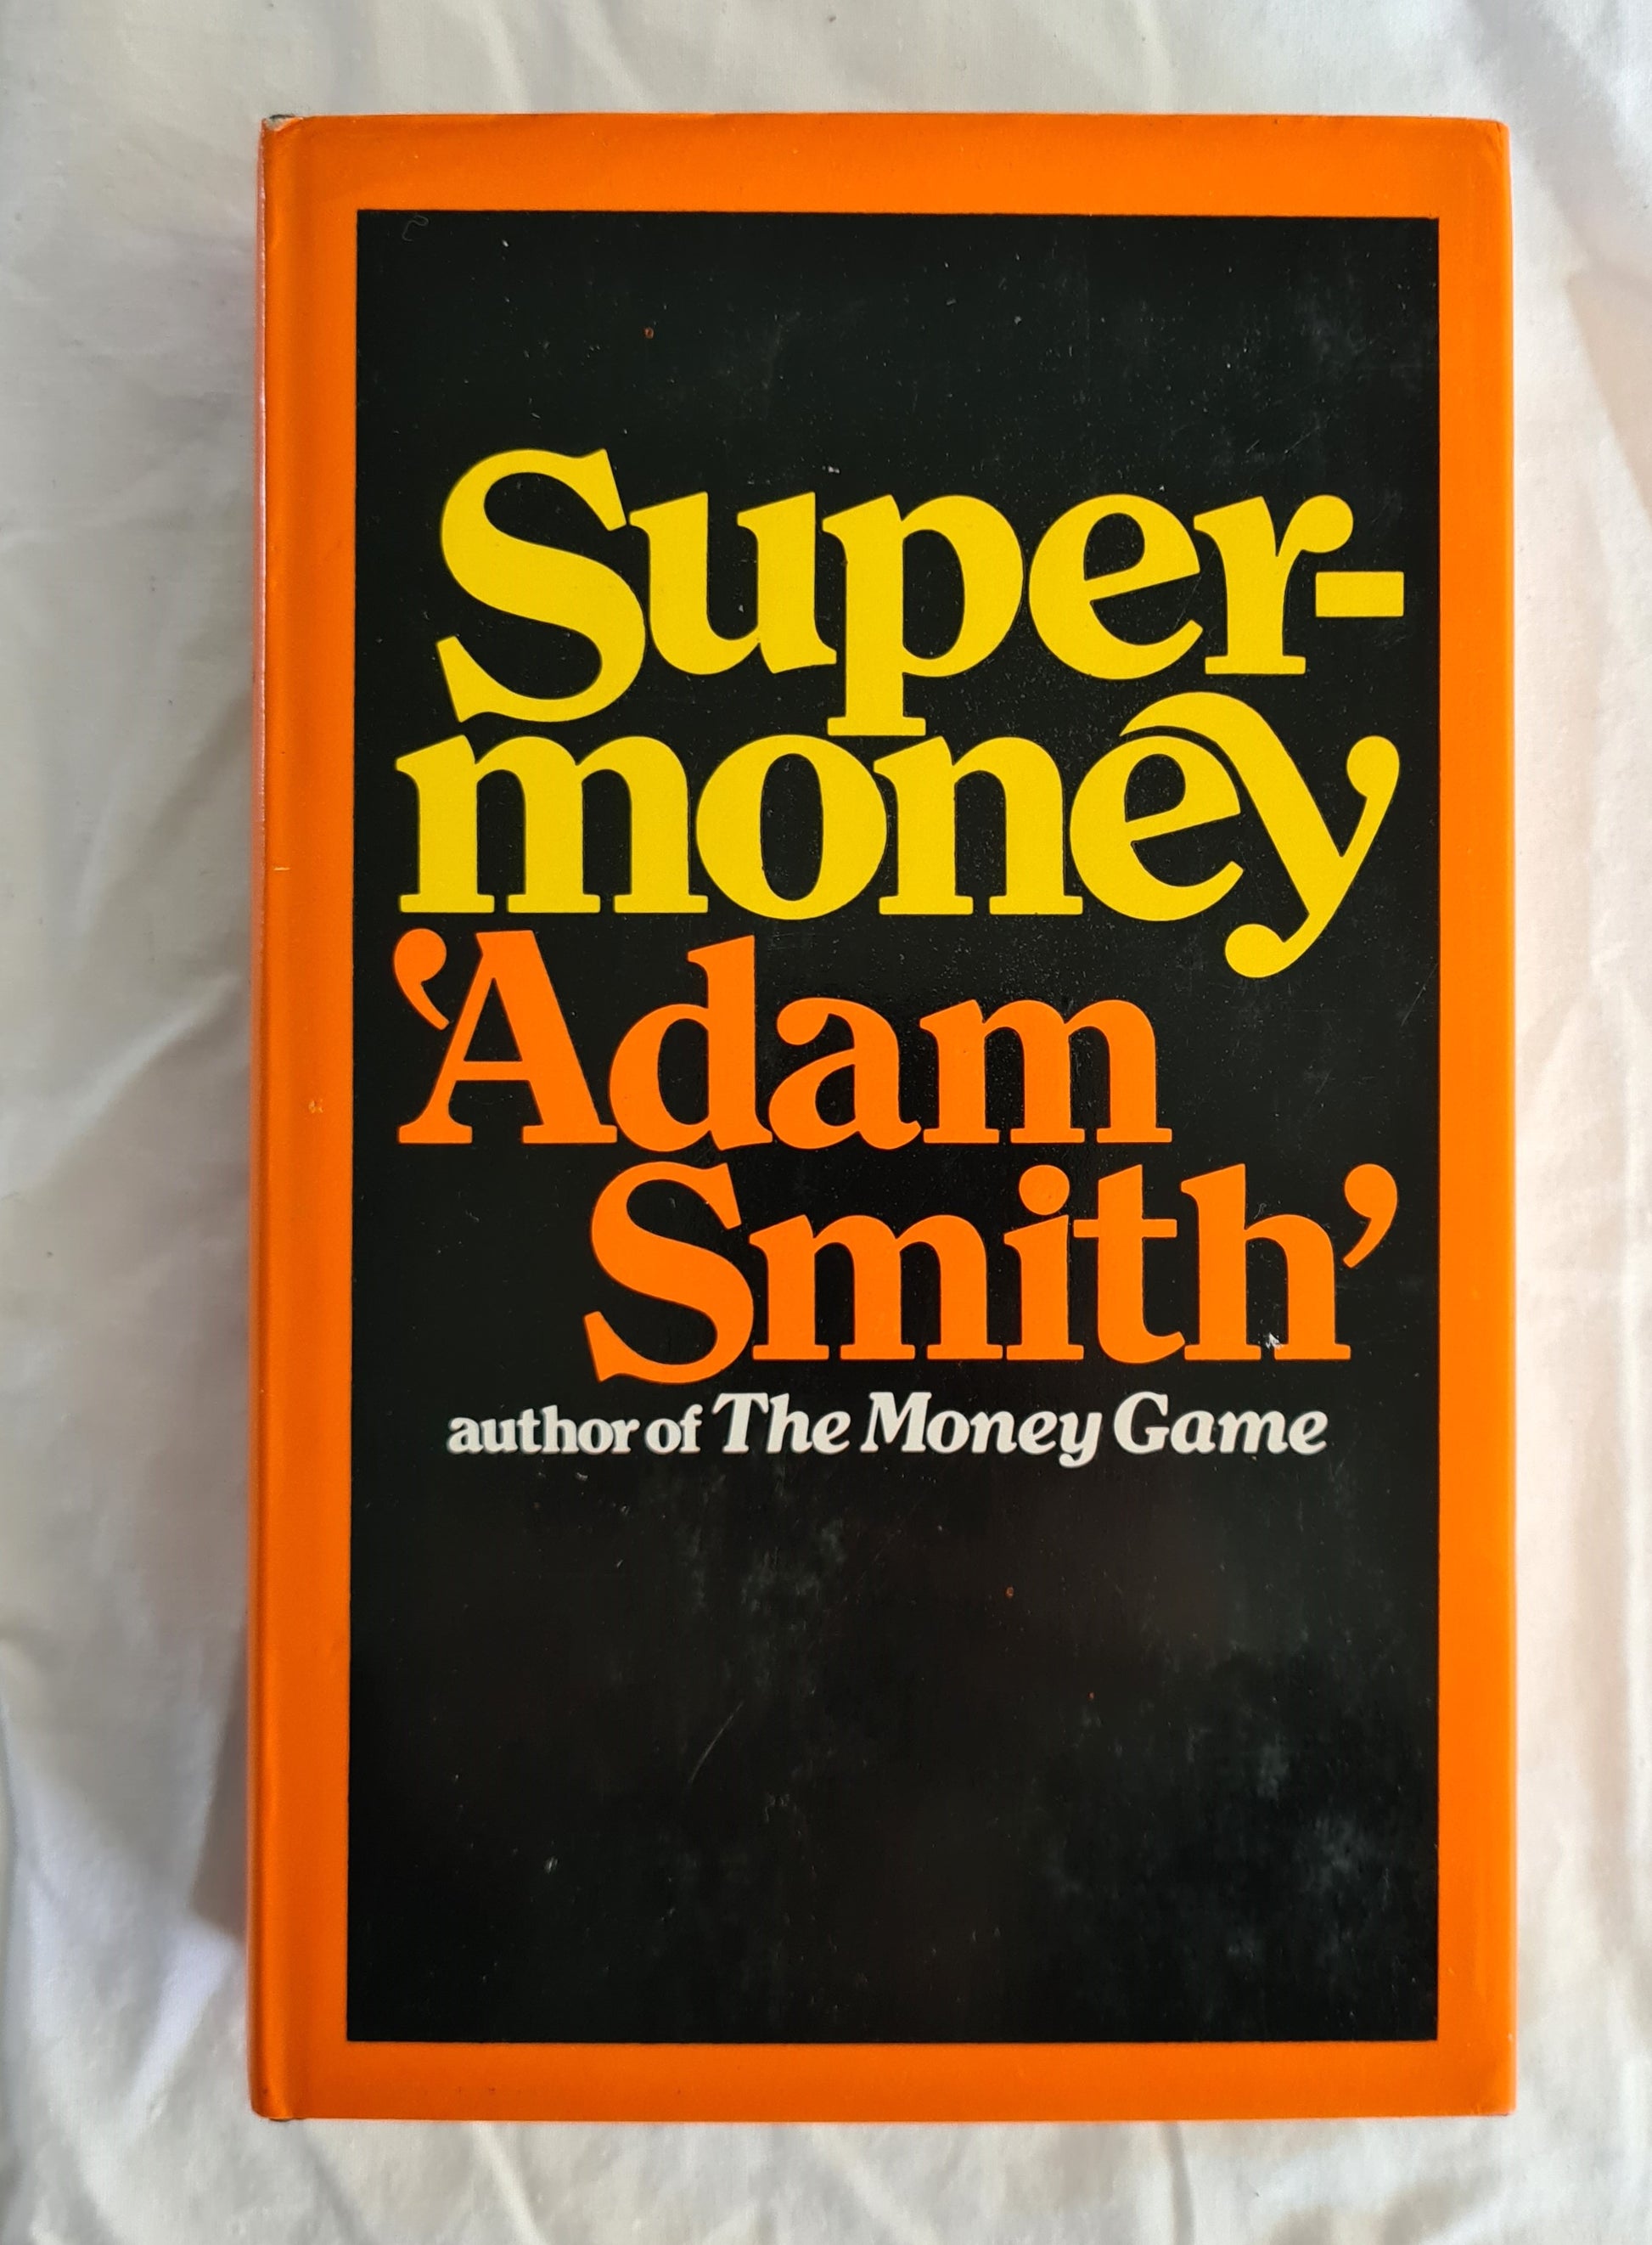 Supermoney  by Adam Smith